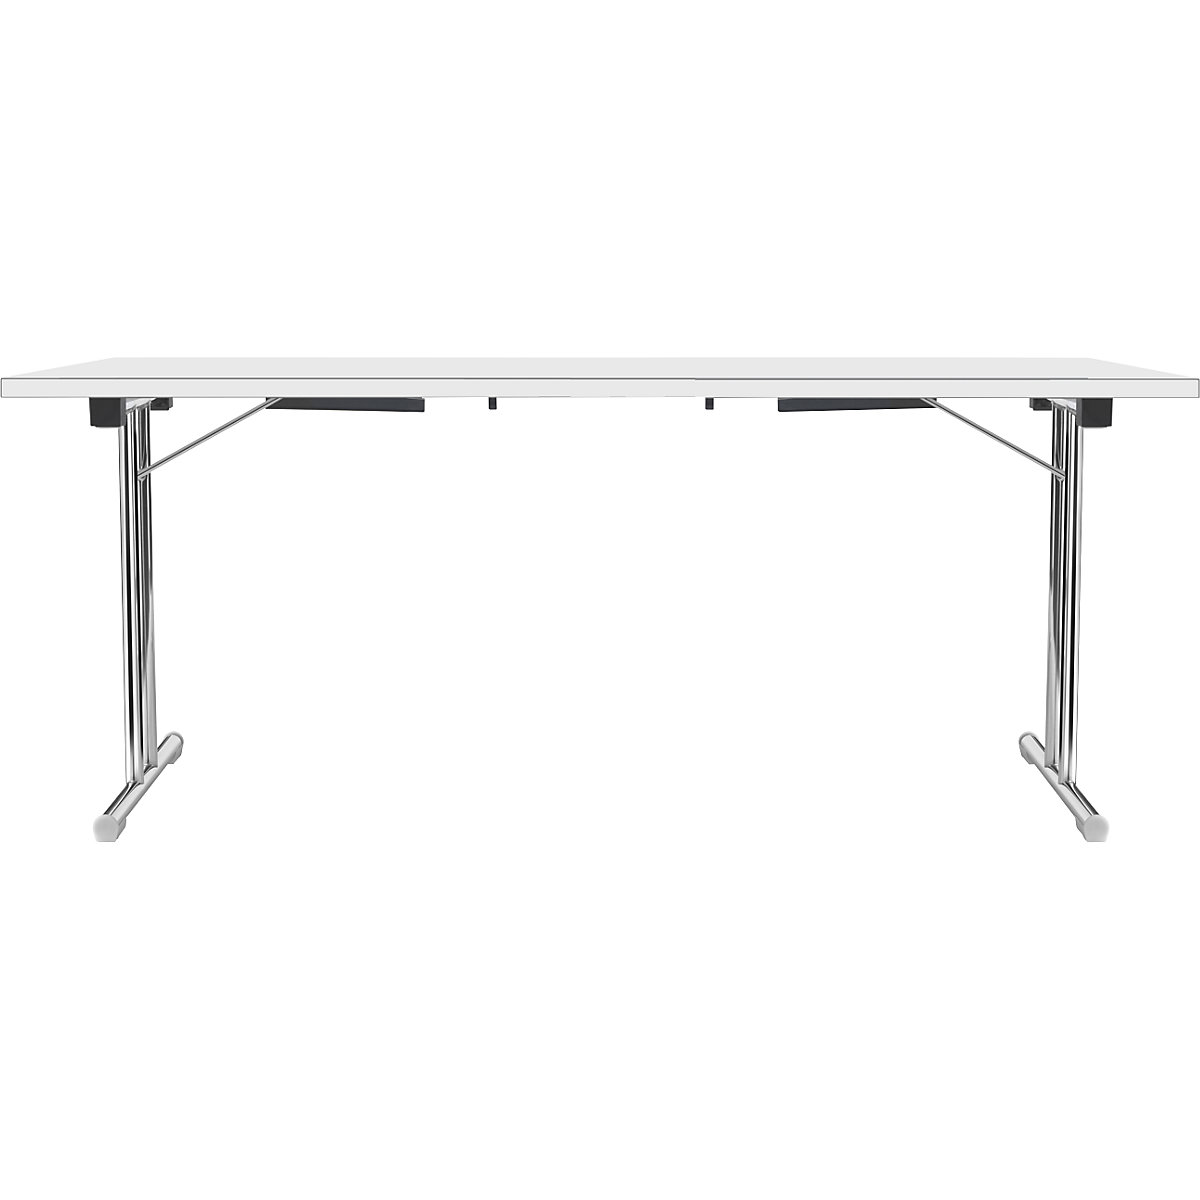 Inklapbare tafel met dubbel T-vormig onderstel, frame van staalbuis, verchroomd, wit/wit, b x d = 1800 x 800 mm-13